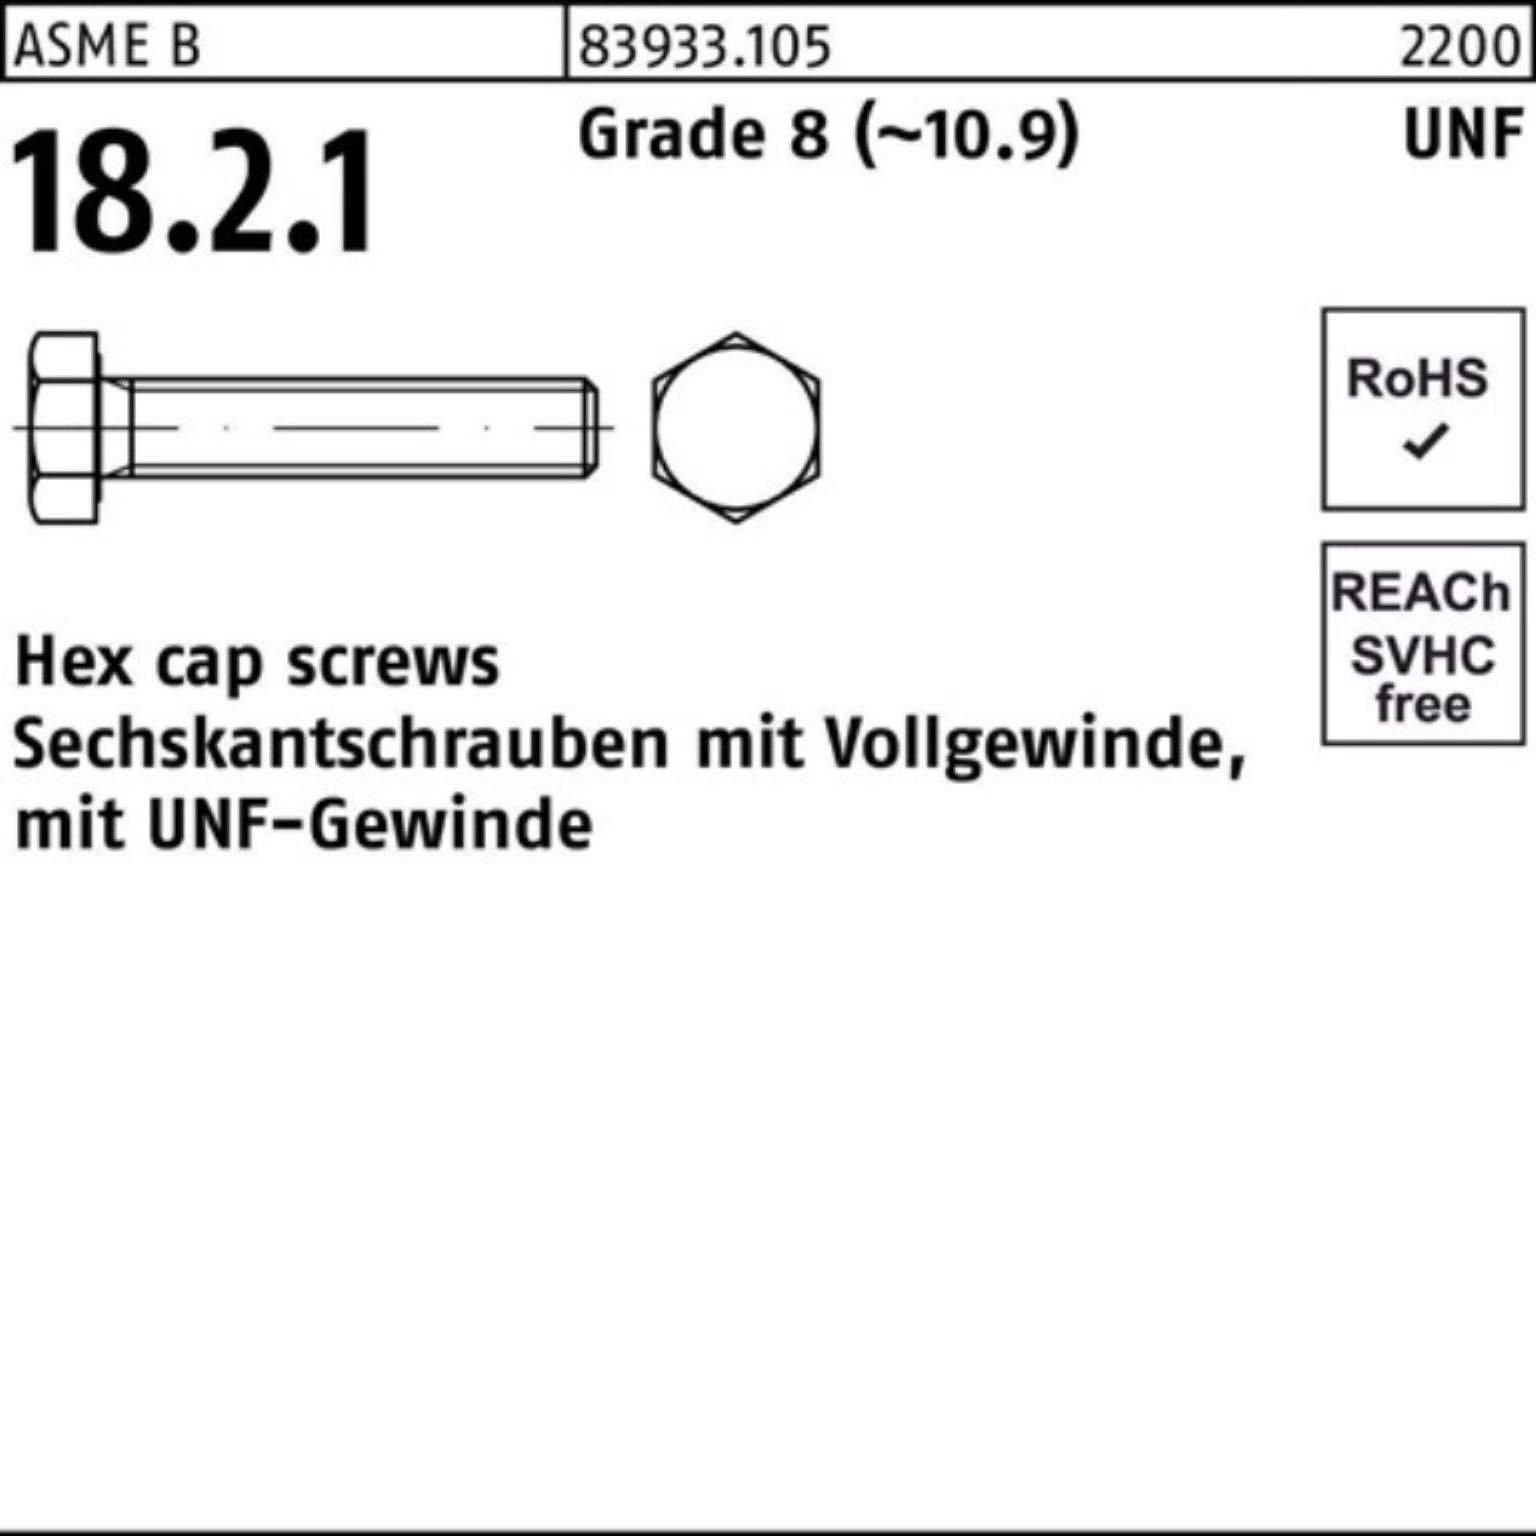 Reyher Sechskantschraube 100er Pack Sechskantschraube R 83933 UNF-Gewinde VG 7/16x 1 1/4 Grade